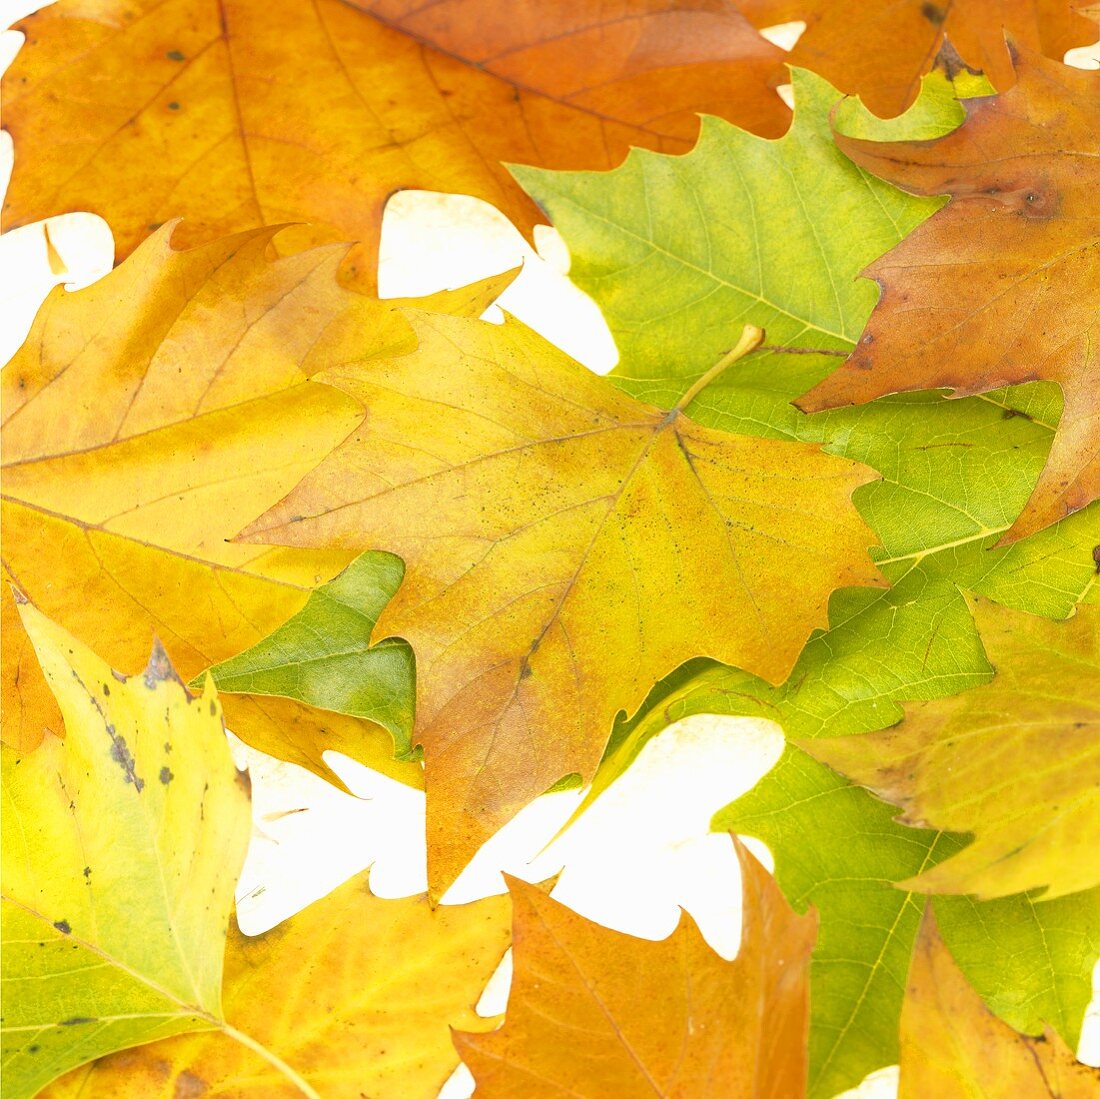 London plane leaves with autumn tints (Platanus x hispanica)